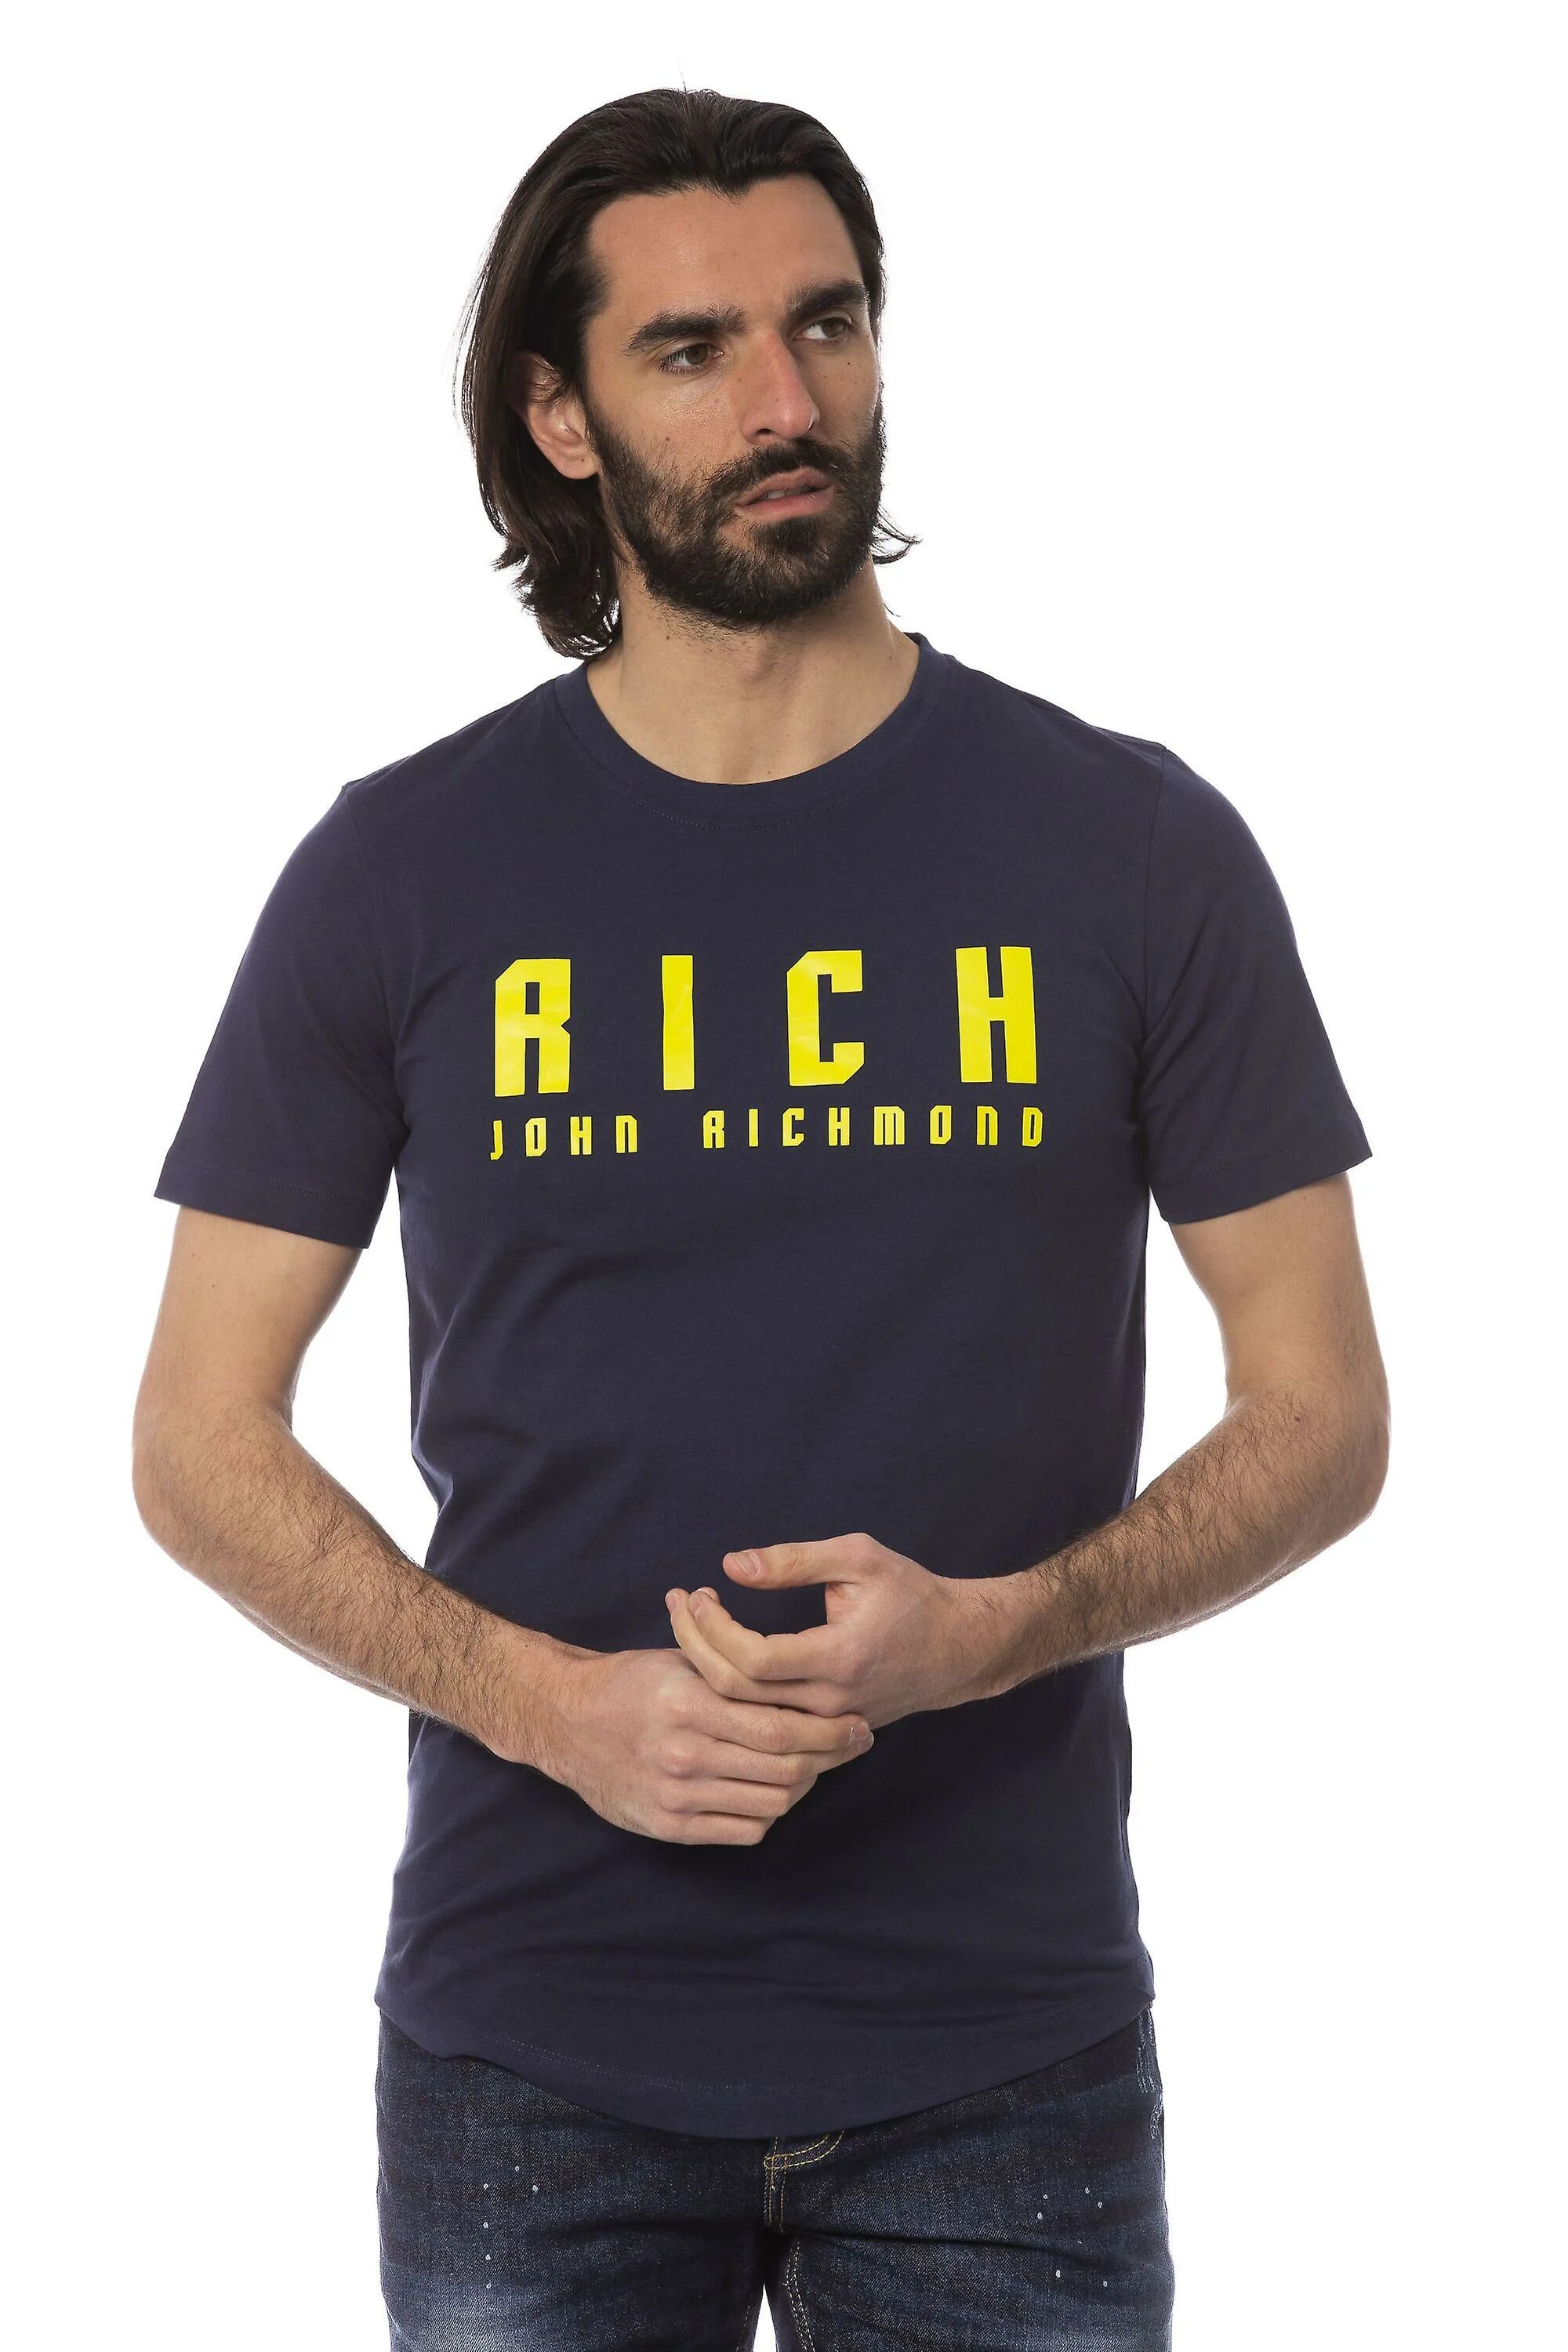 John Richmond футболка. Майка Джон Ричмонд мужская. Джон Ричмонд футболка мужская. Richmond майка мужская.